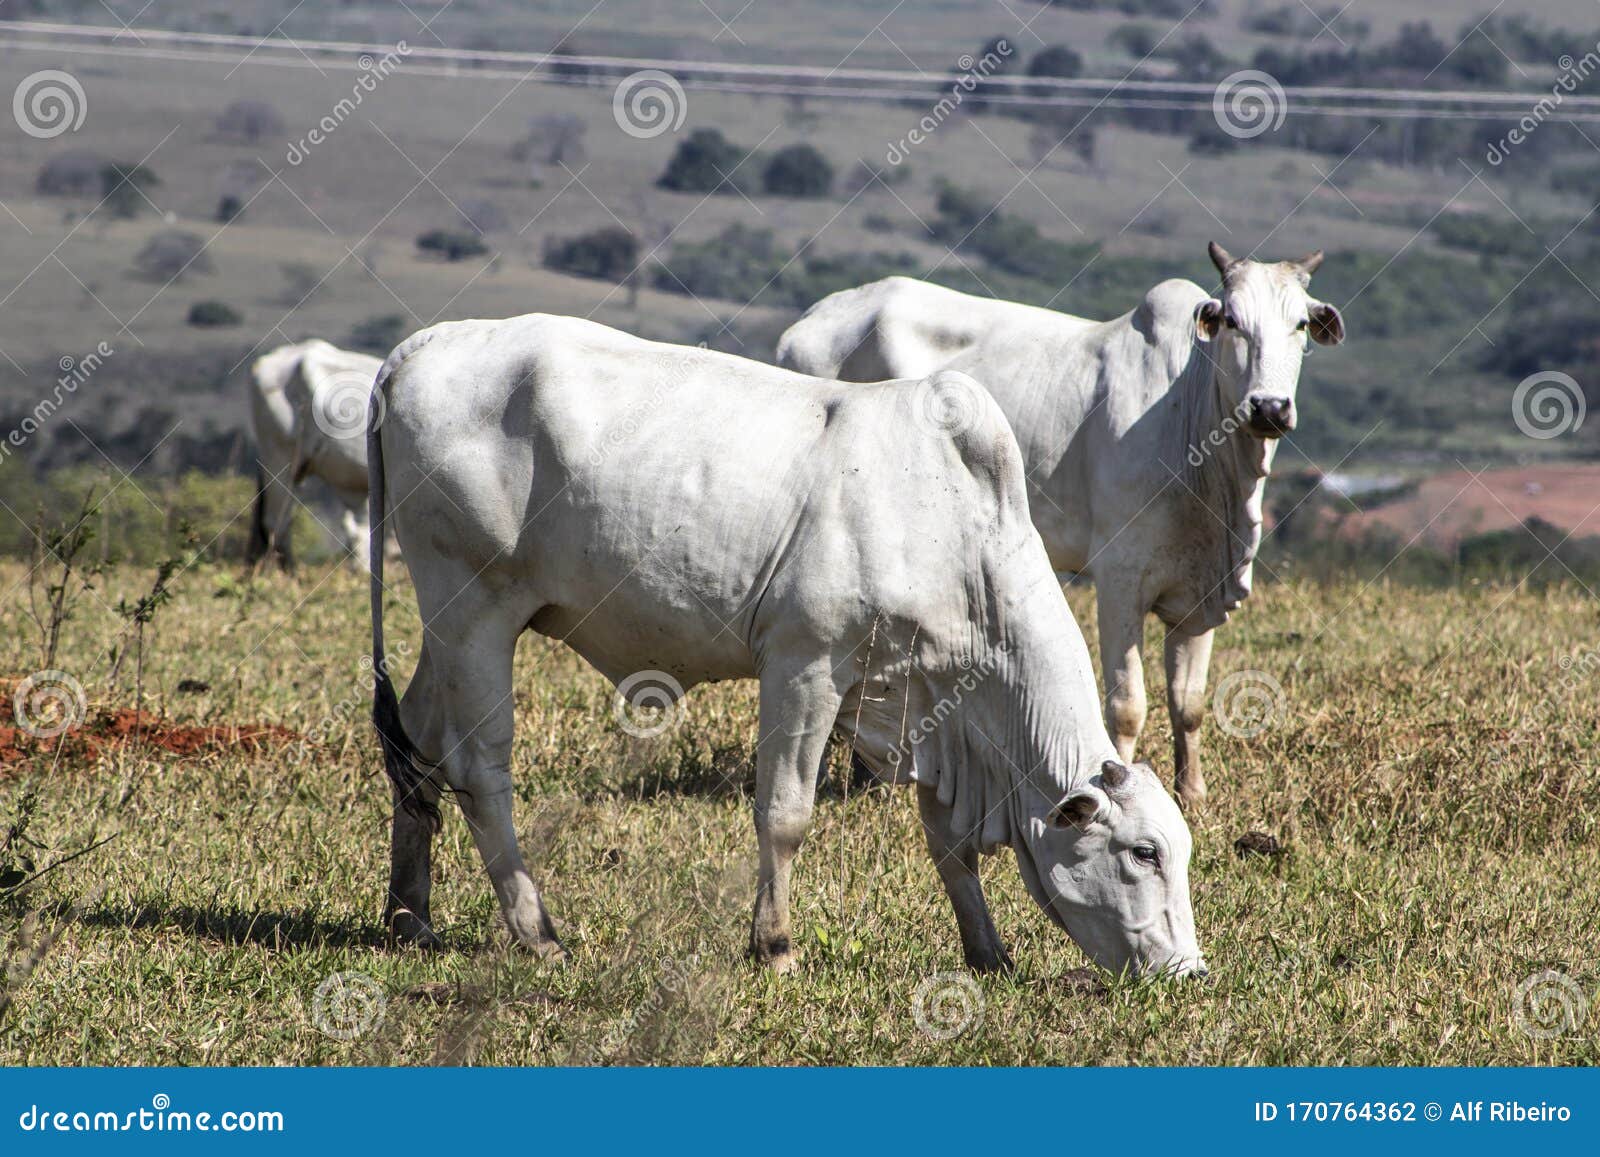 nelore cattle in a pasture located in brazil